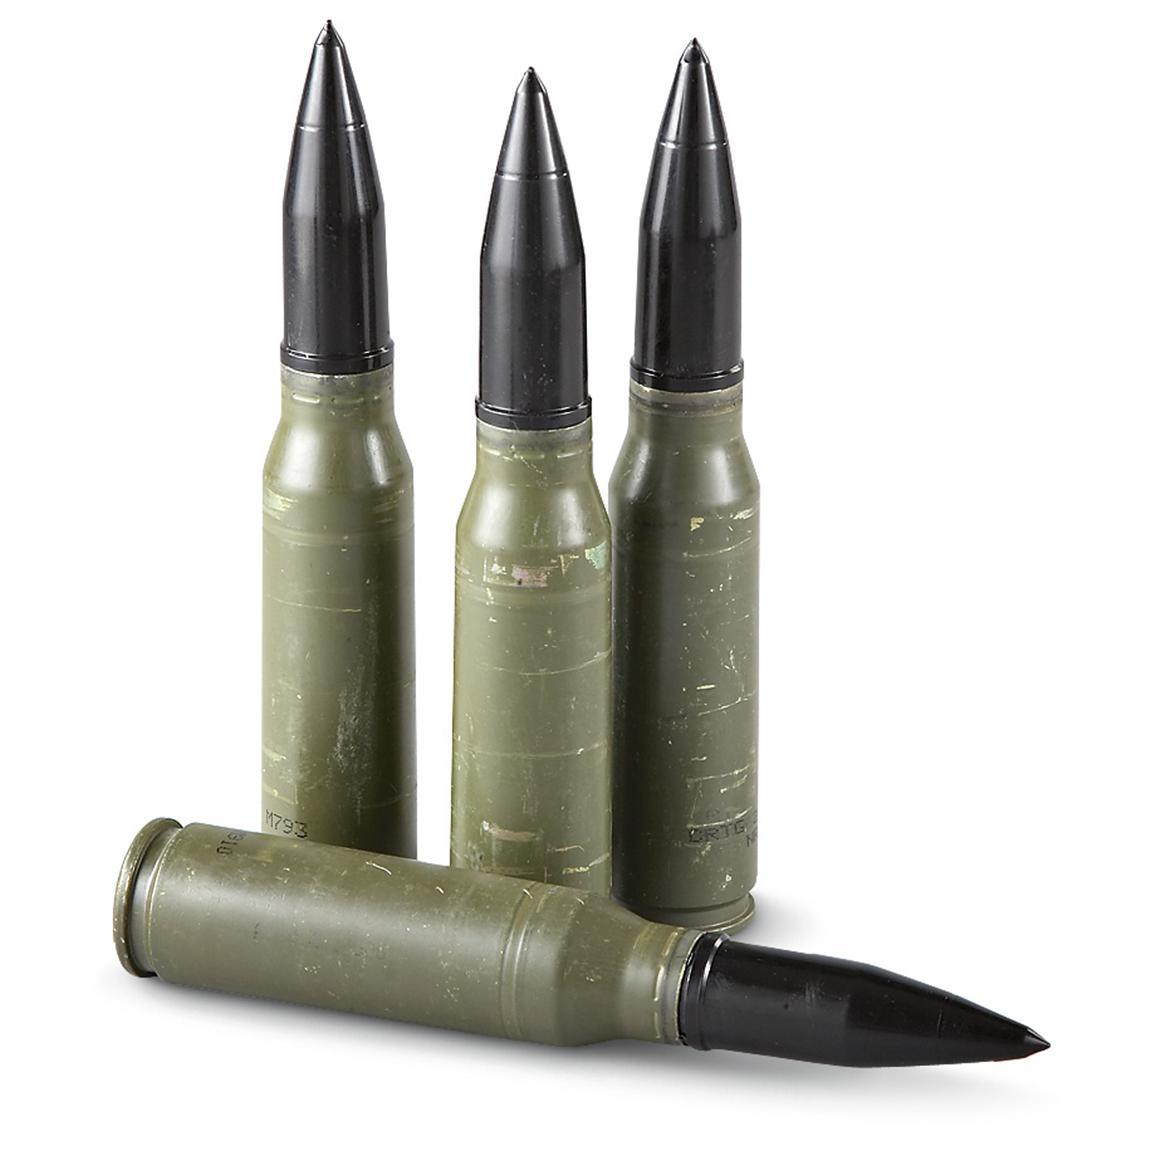 4 Used U.S. Military Surplus 25mm Dummy Rounds